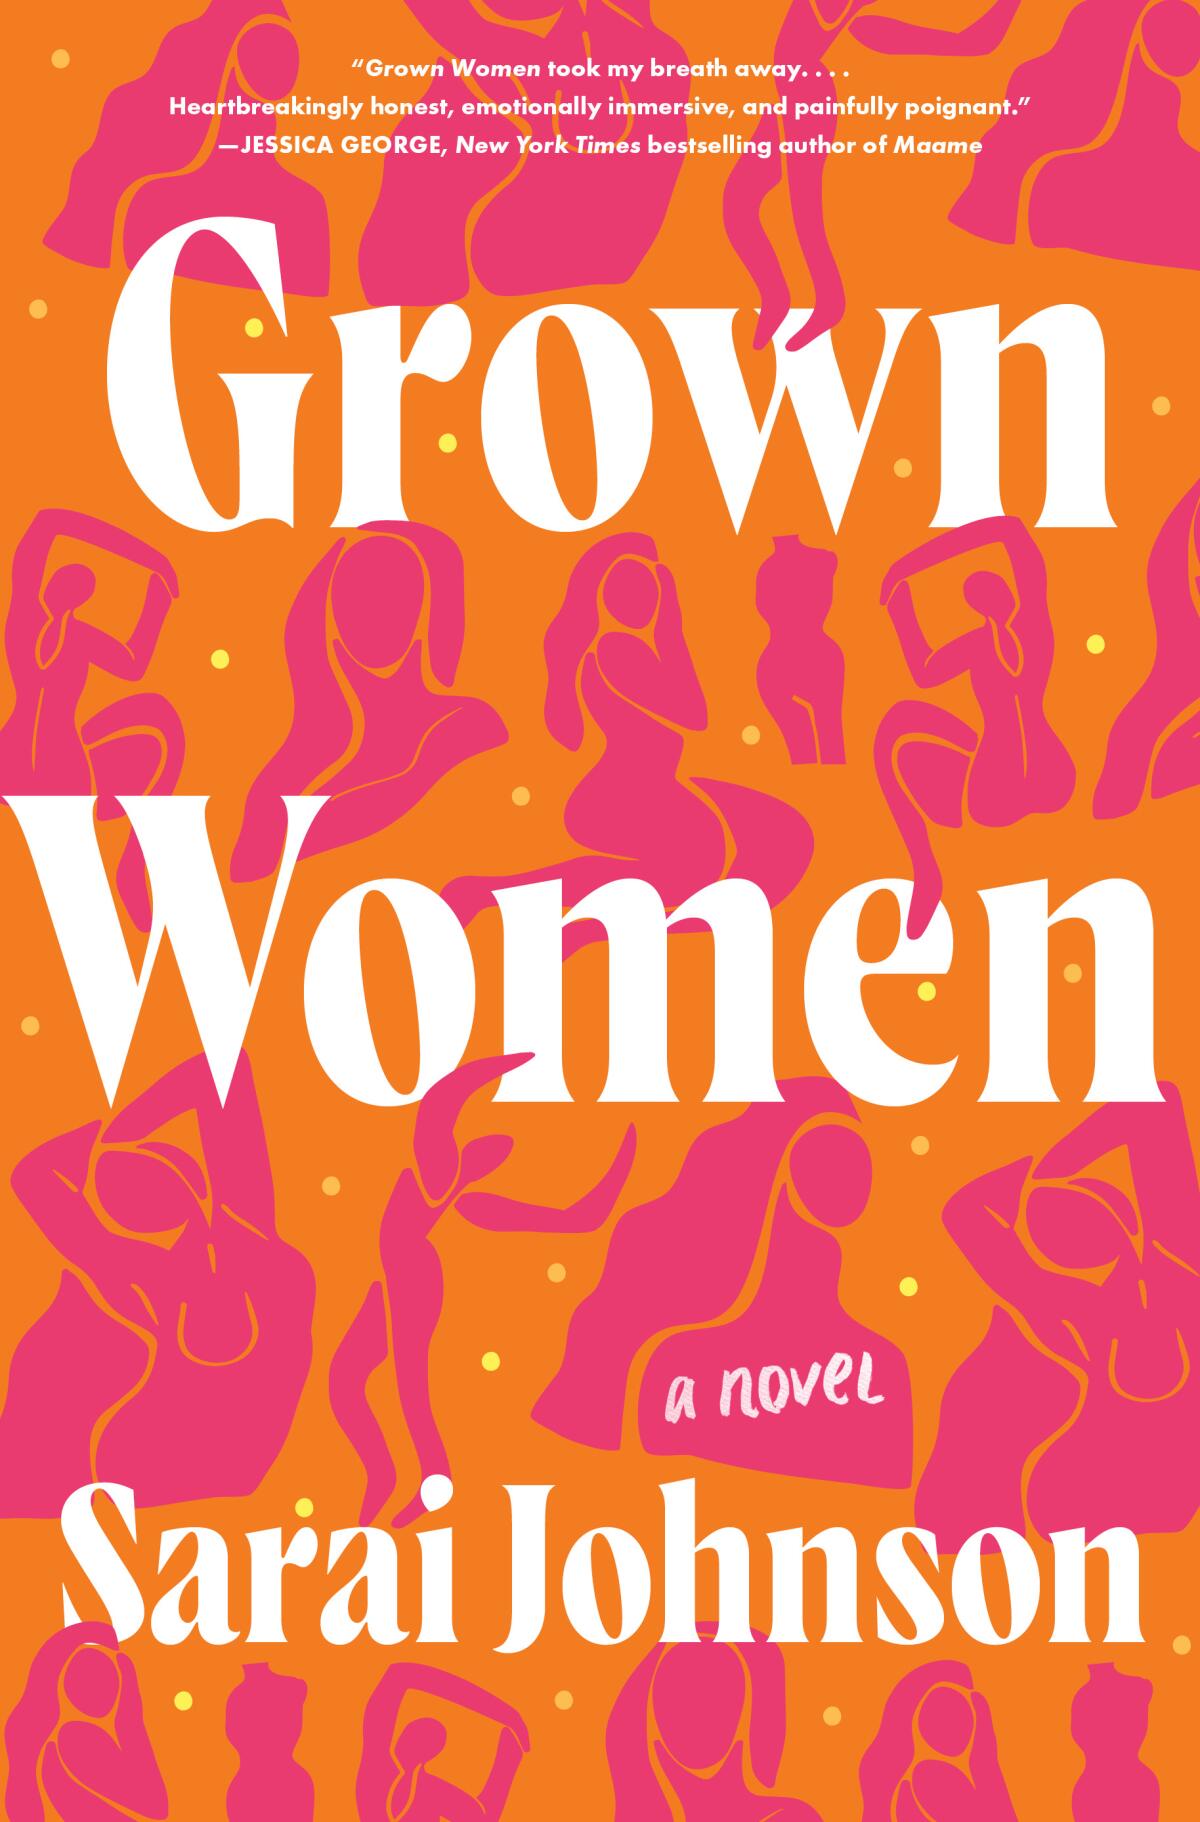 Book cover of "Grown Women" by Sarai Johnson